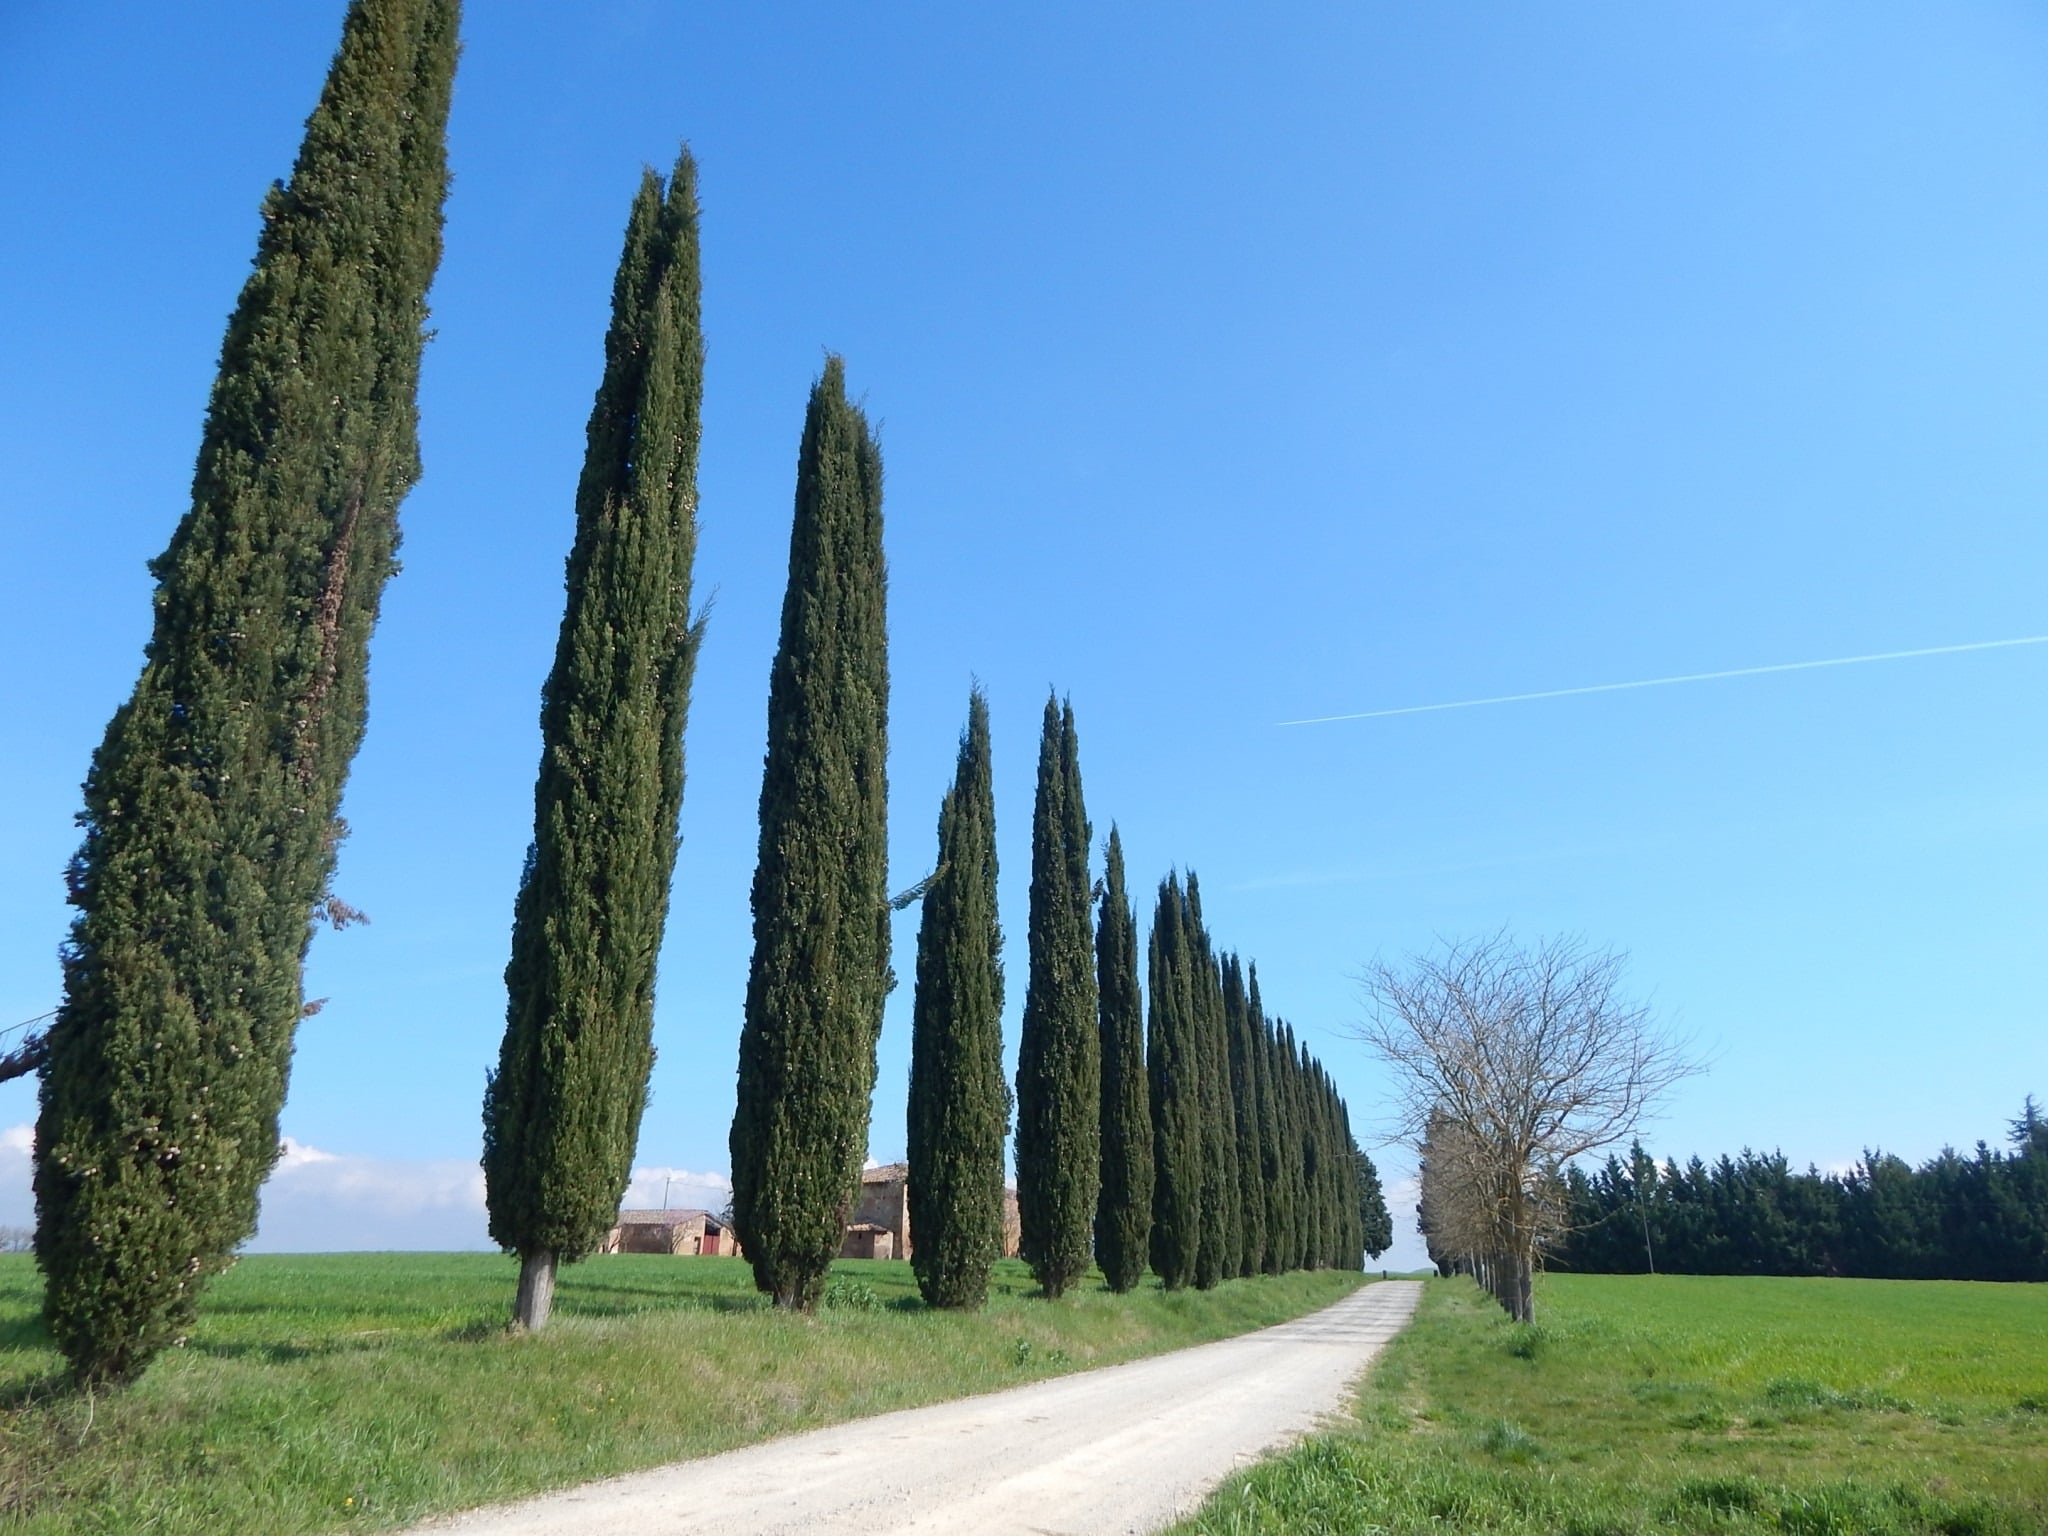 Walking south of Siena on the Via Francigena